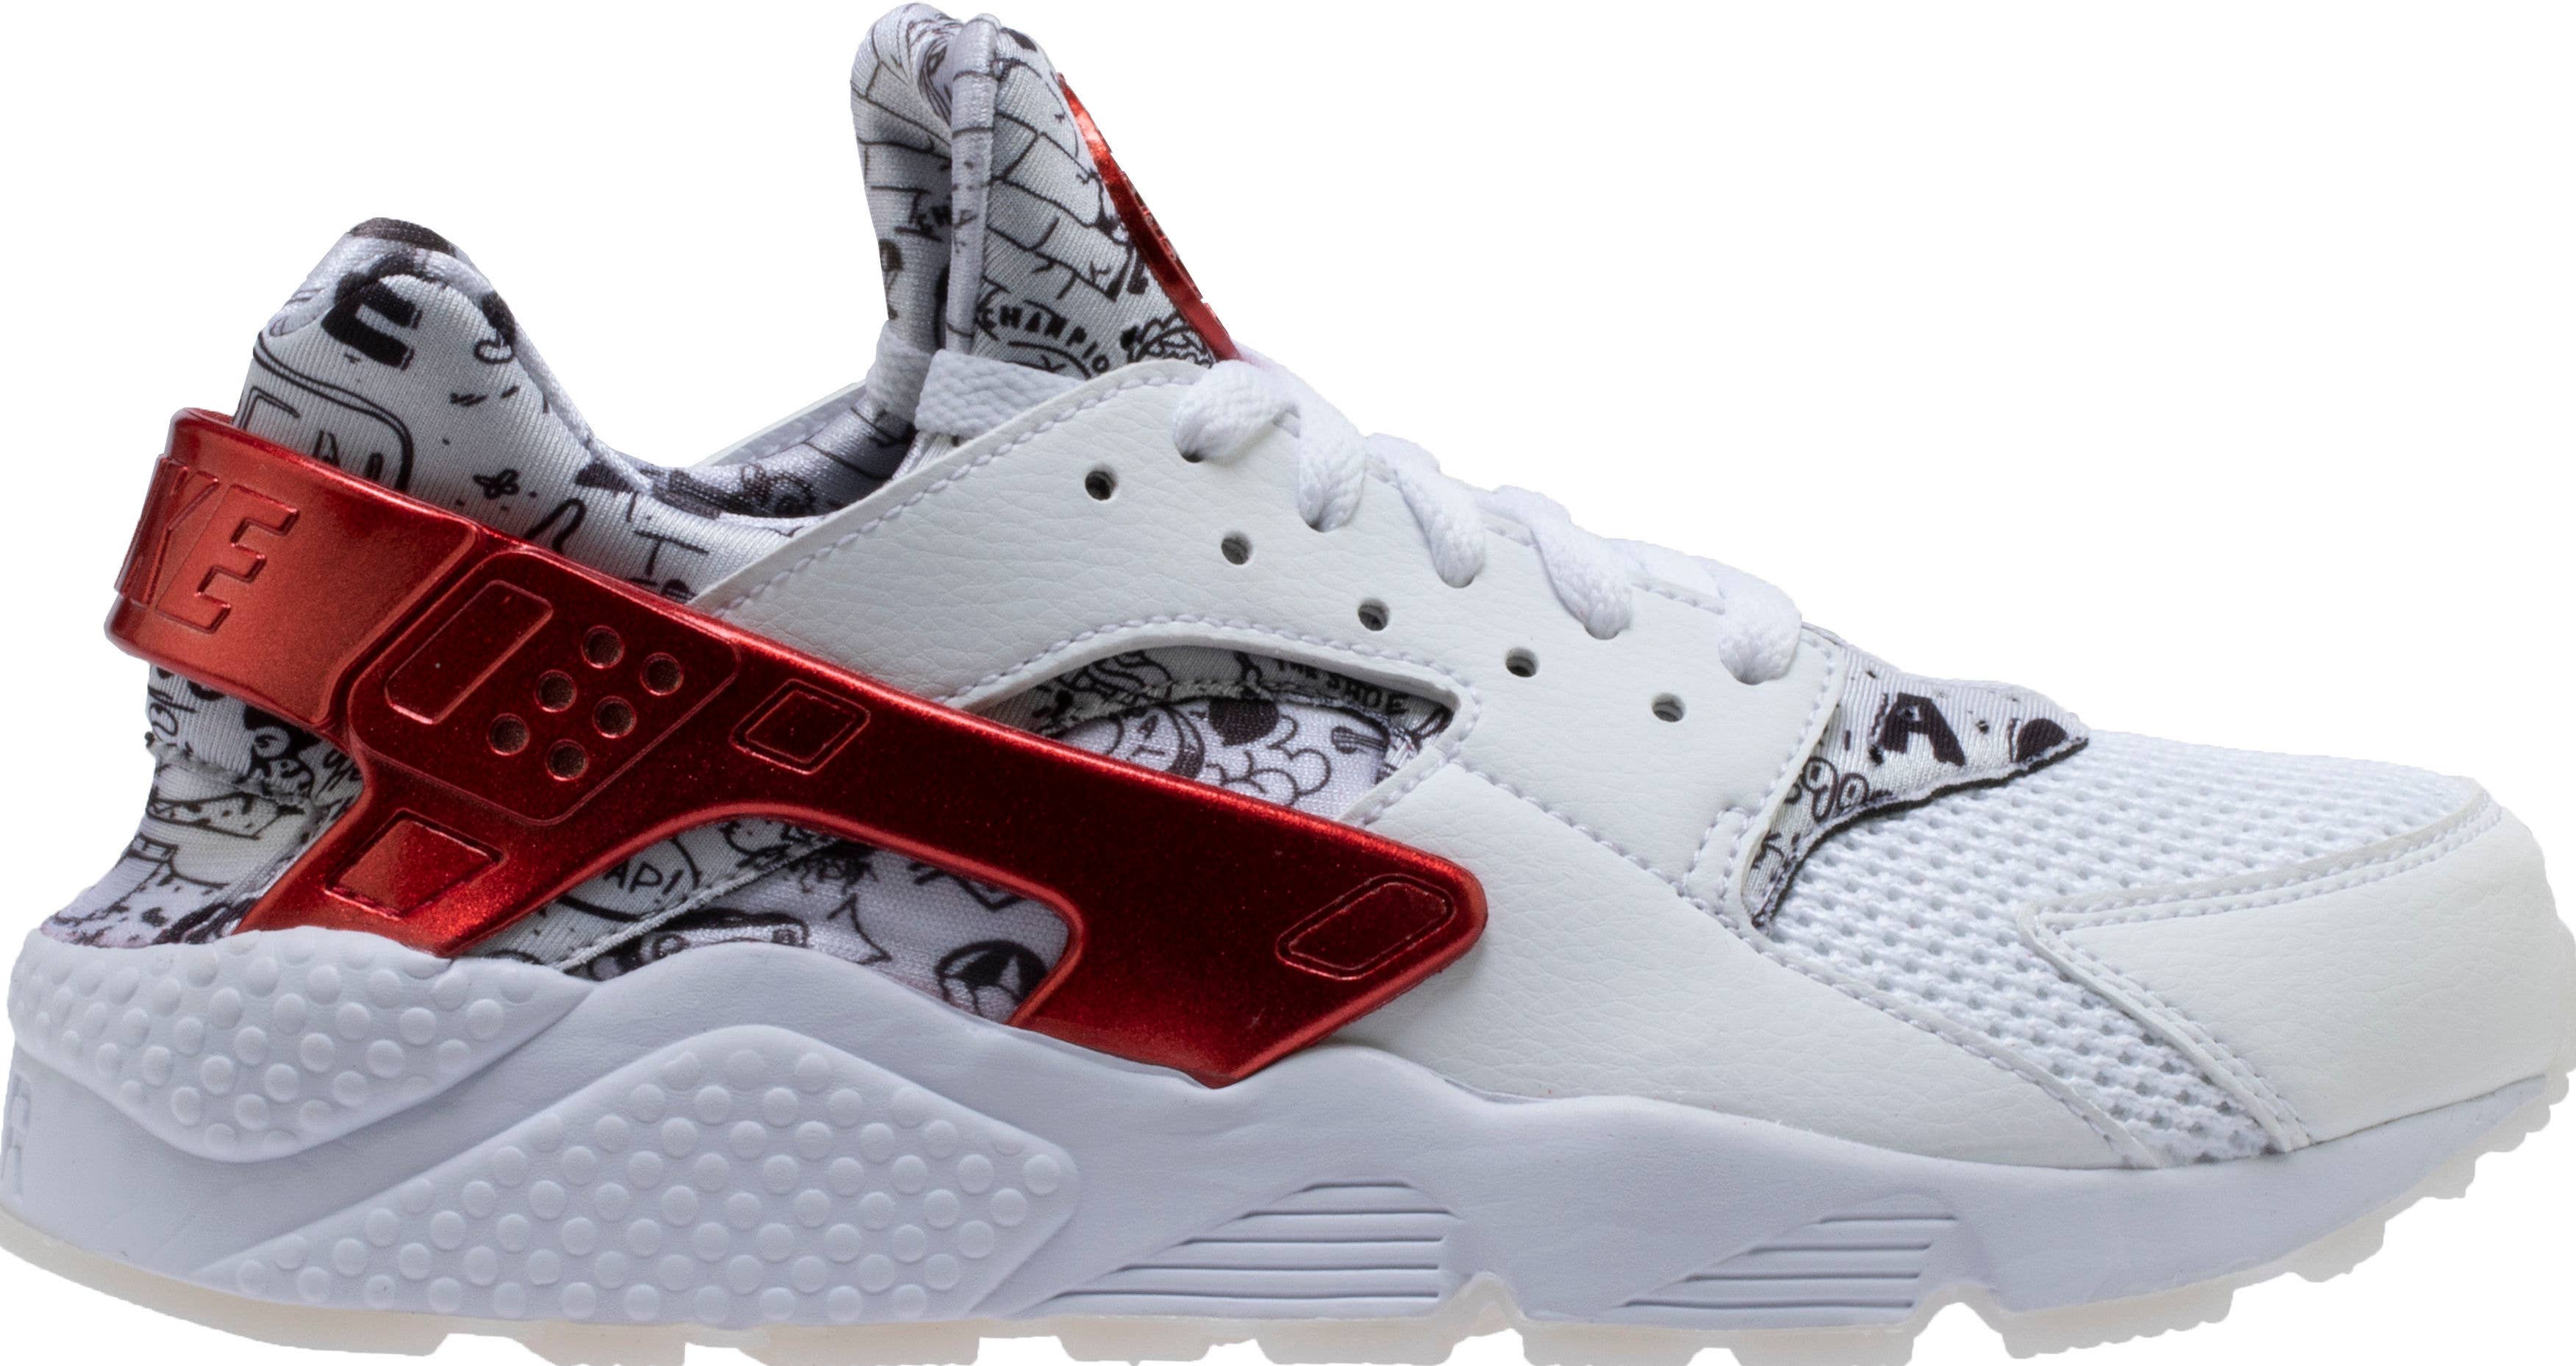 Shoe Palace x Nike Air Huarache White/Red/Platinum 'Joonbug' AJ5578 101 (Lateral)